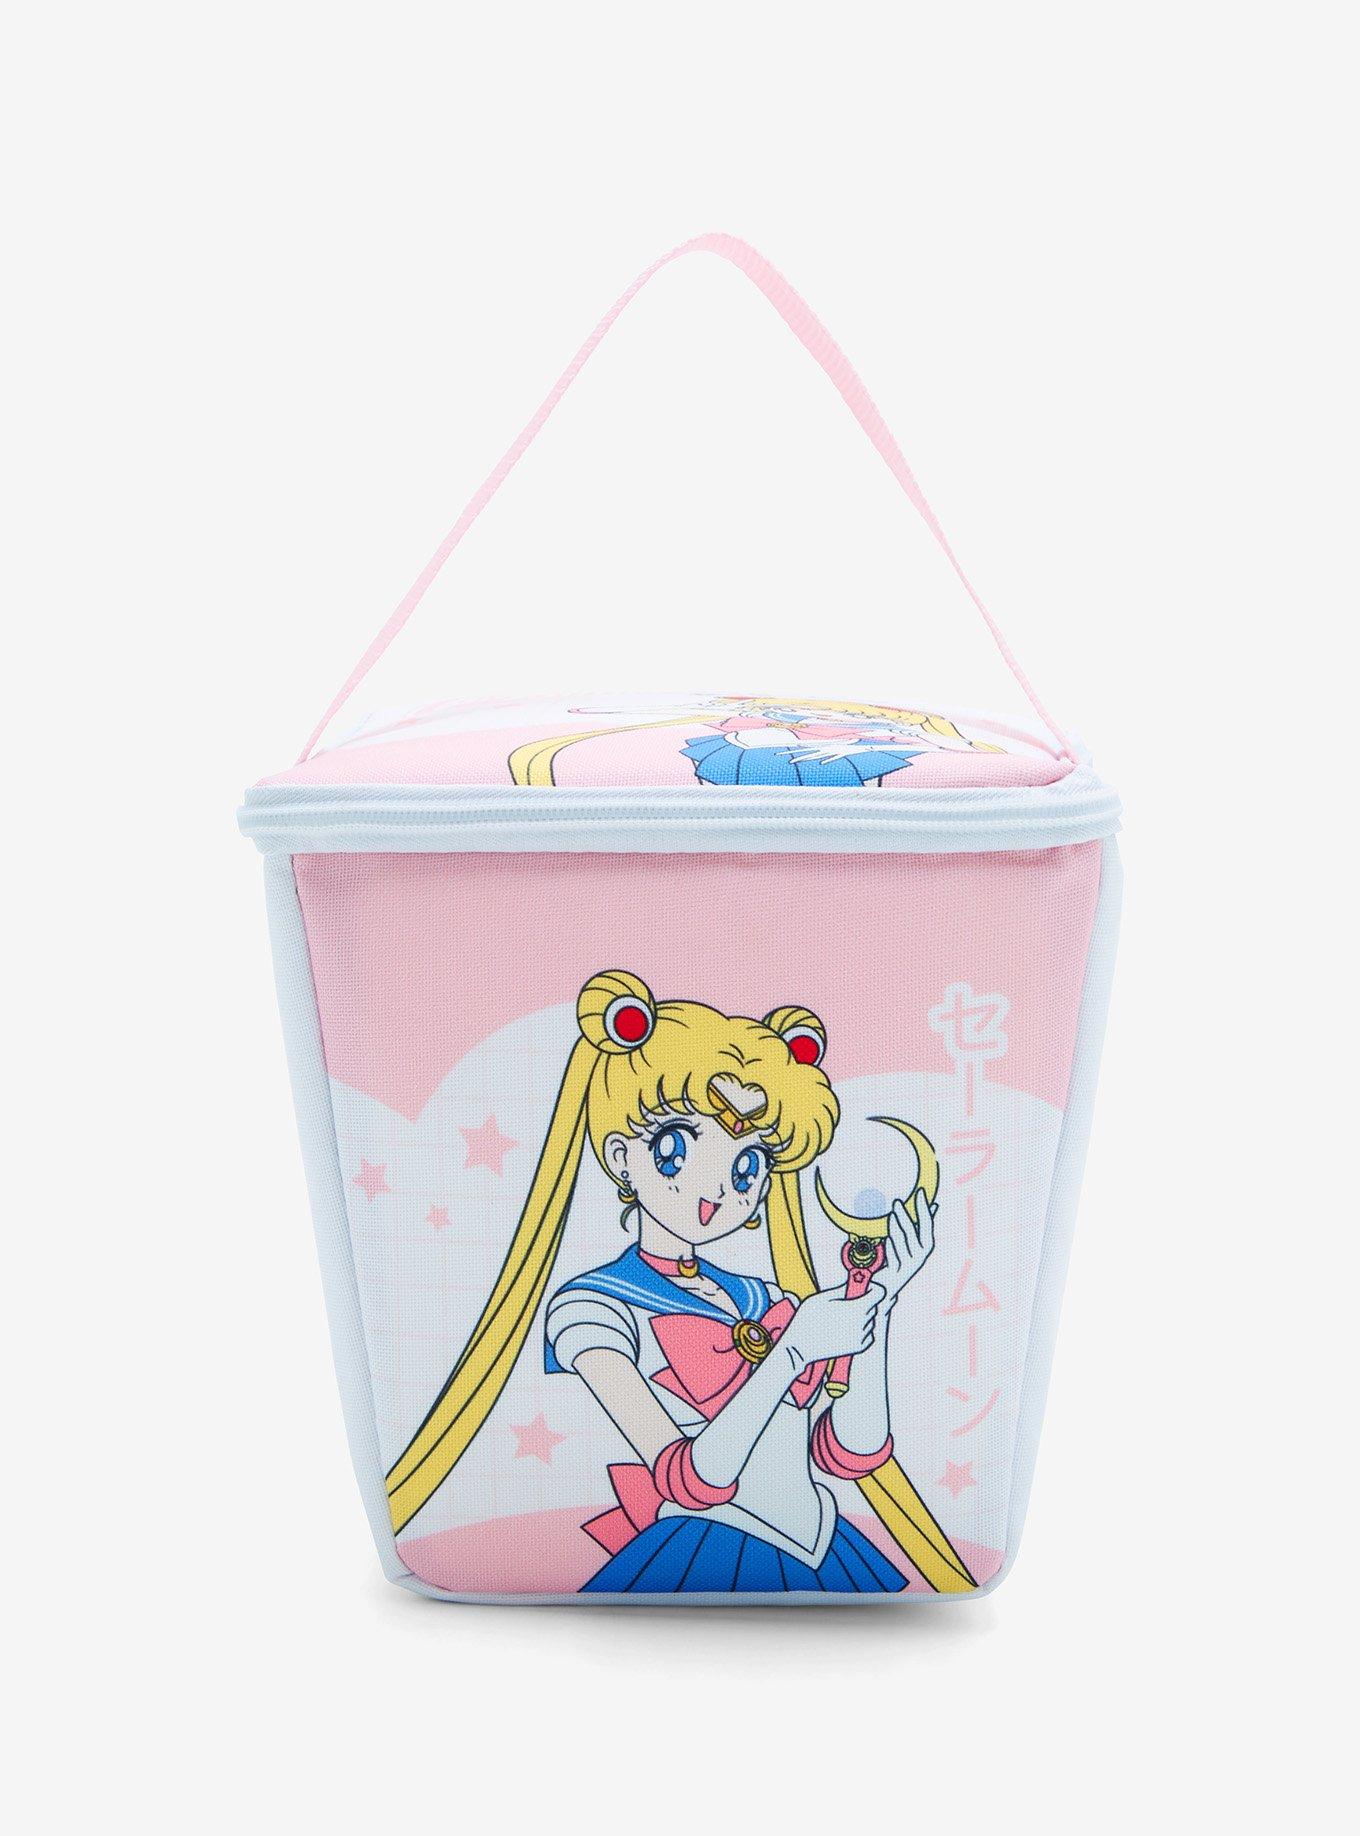 Sailormoon Lunch Box